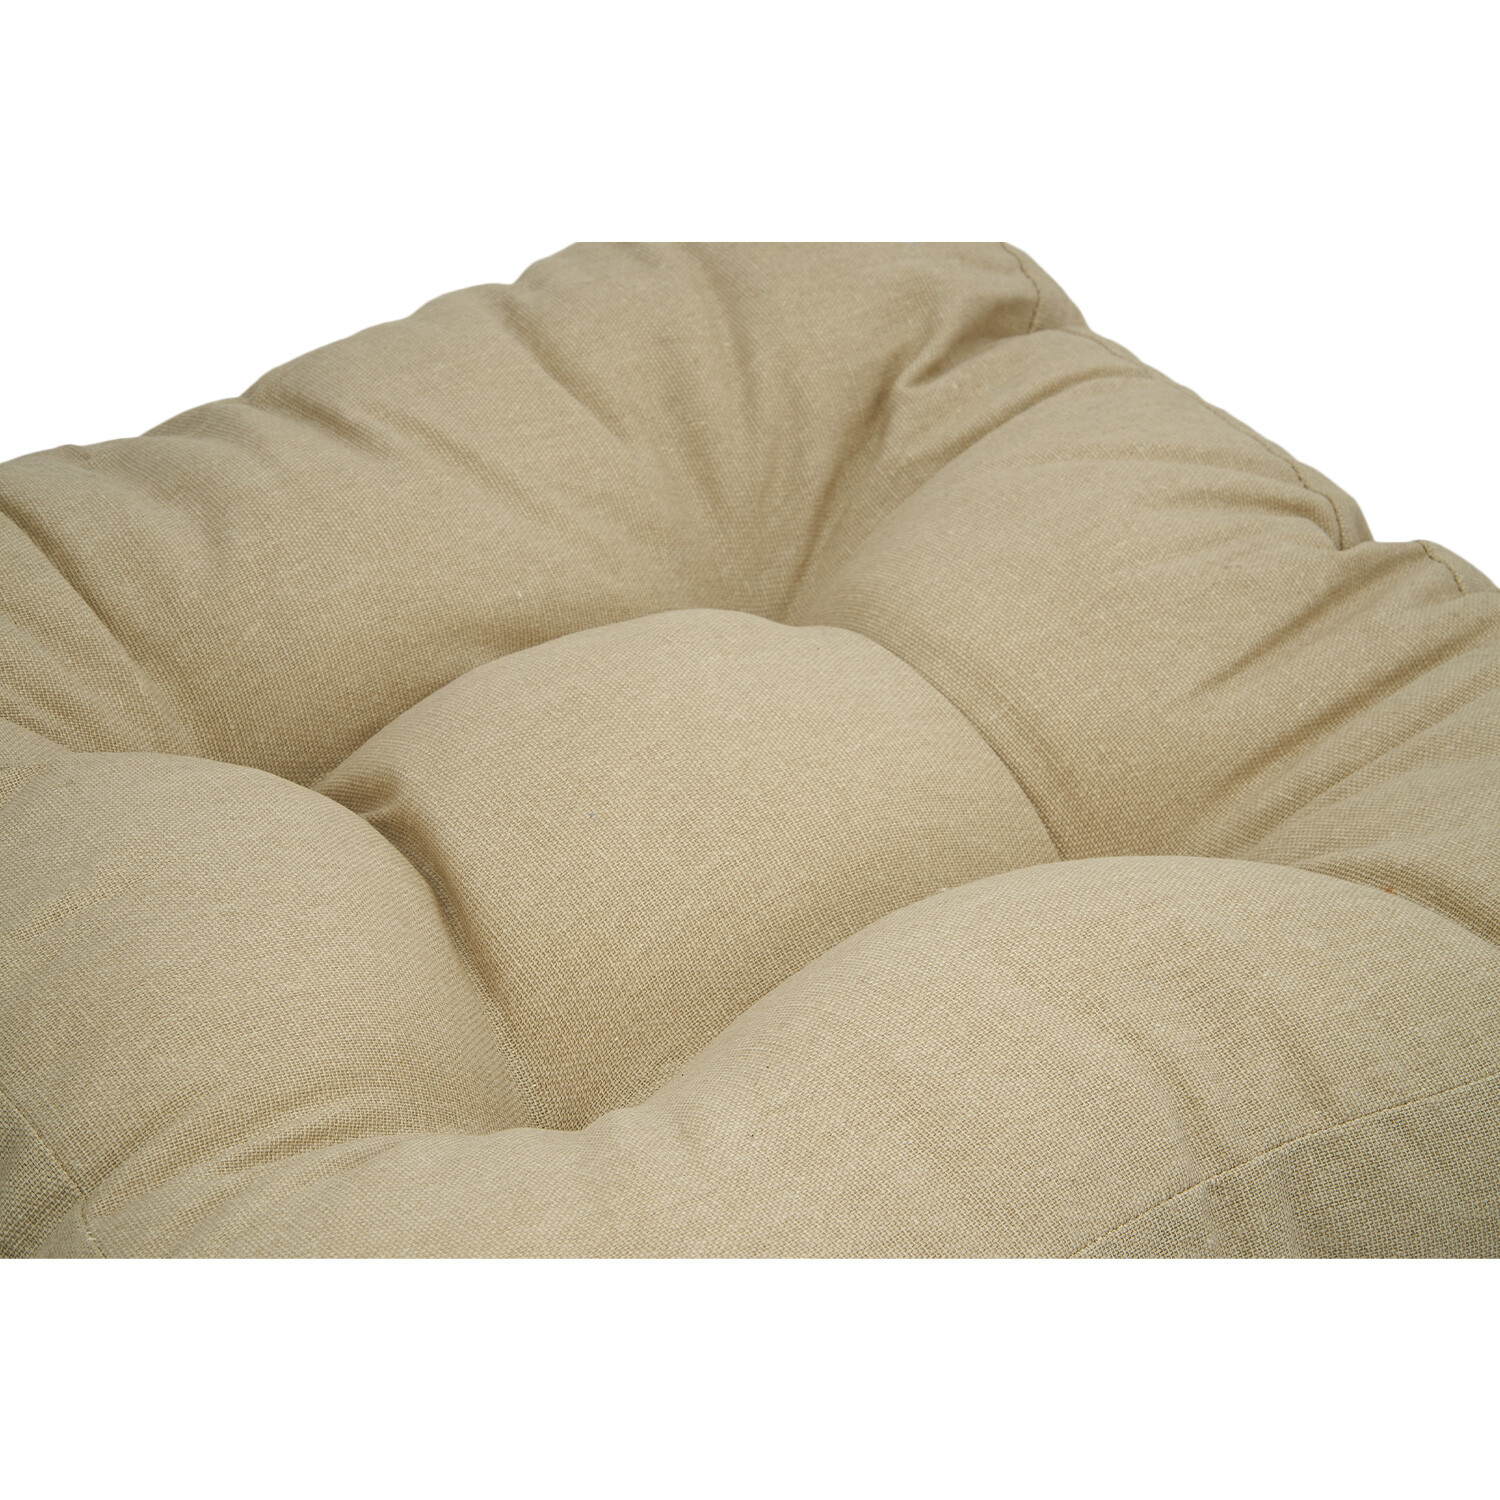 Premium Booster Cushion - Beige Image 3